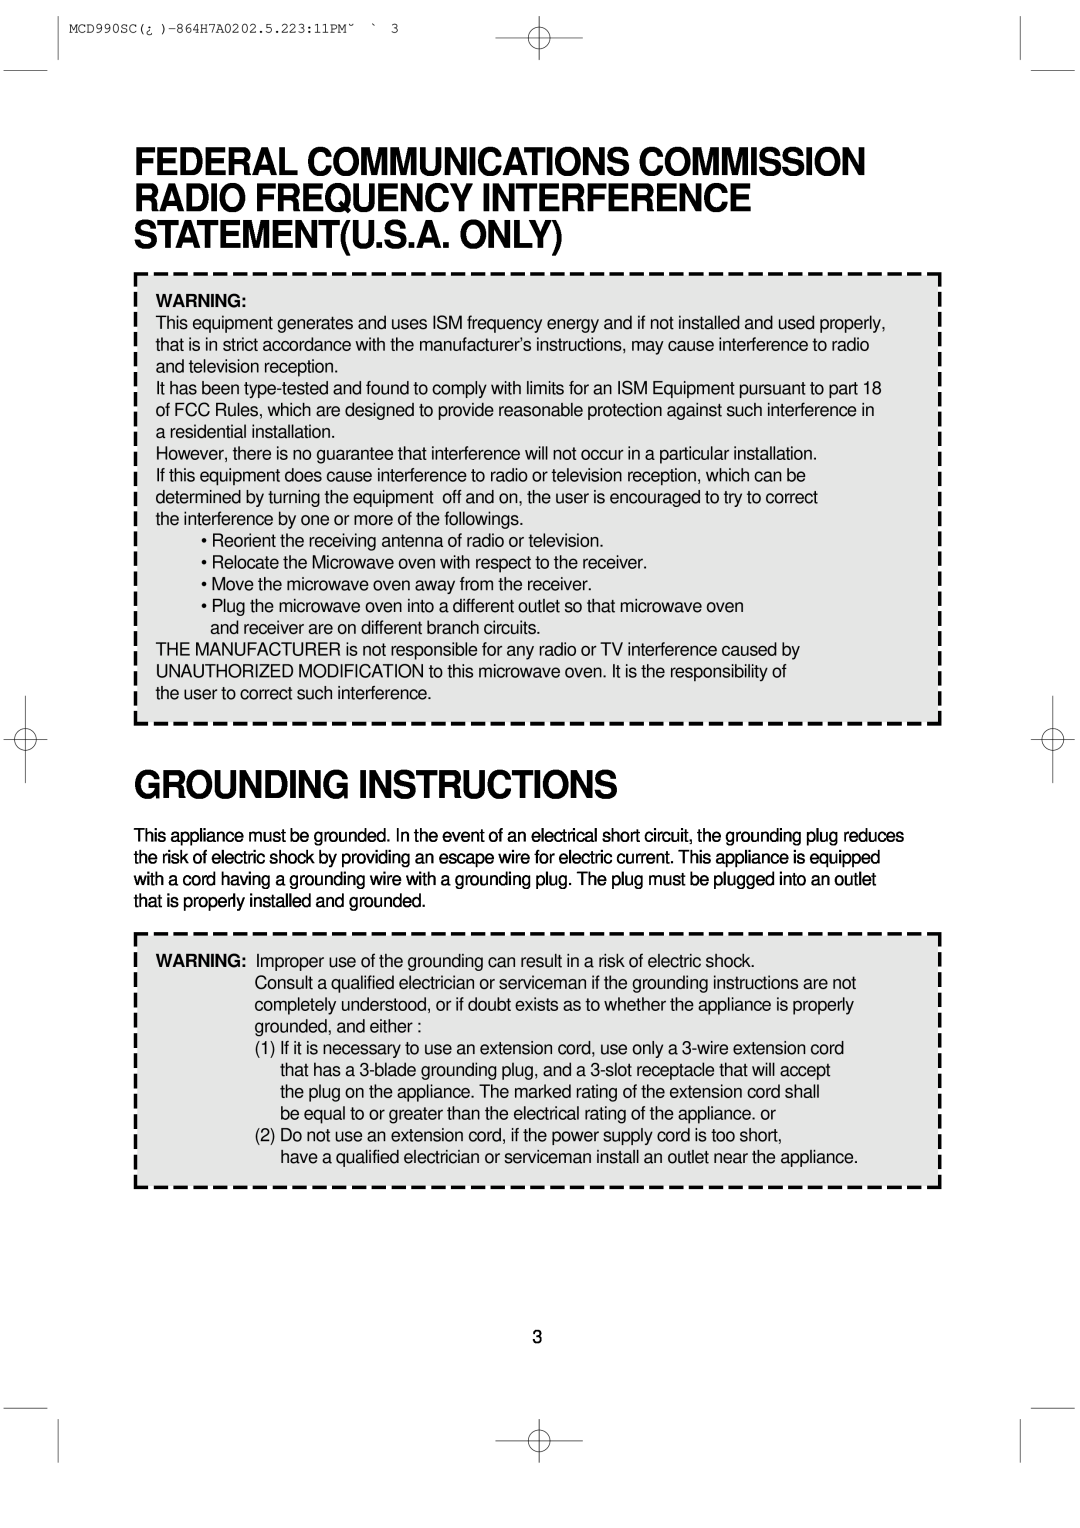 Magic Chef MCD990SC instruction manual Grounding Instructions 